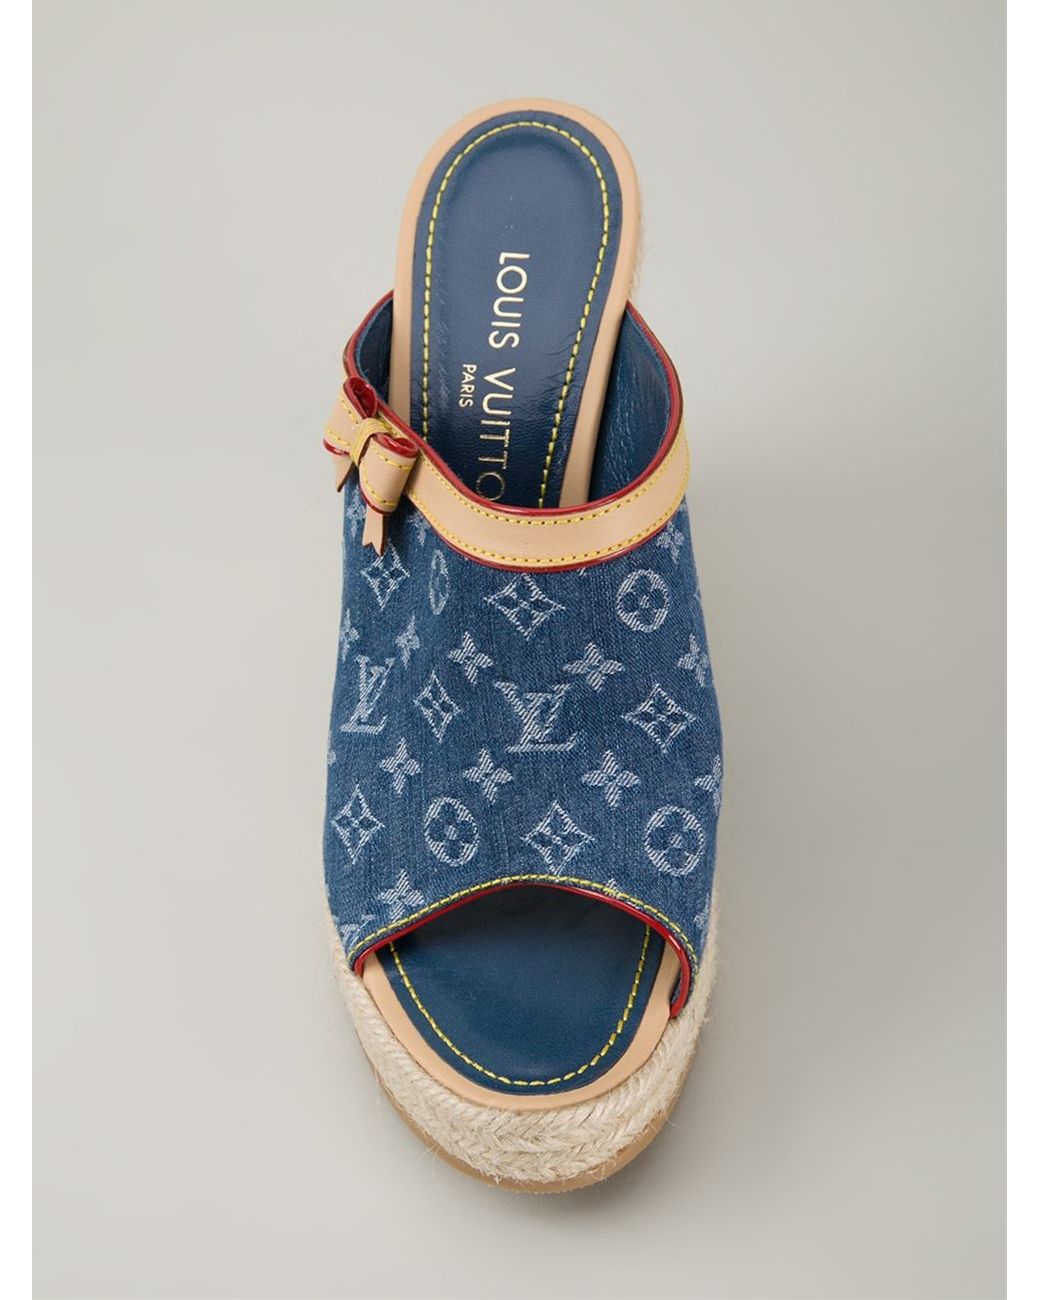 LOUIS VUITTON LV monogram blue denim beige bow wooden clog sandals EU36.5